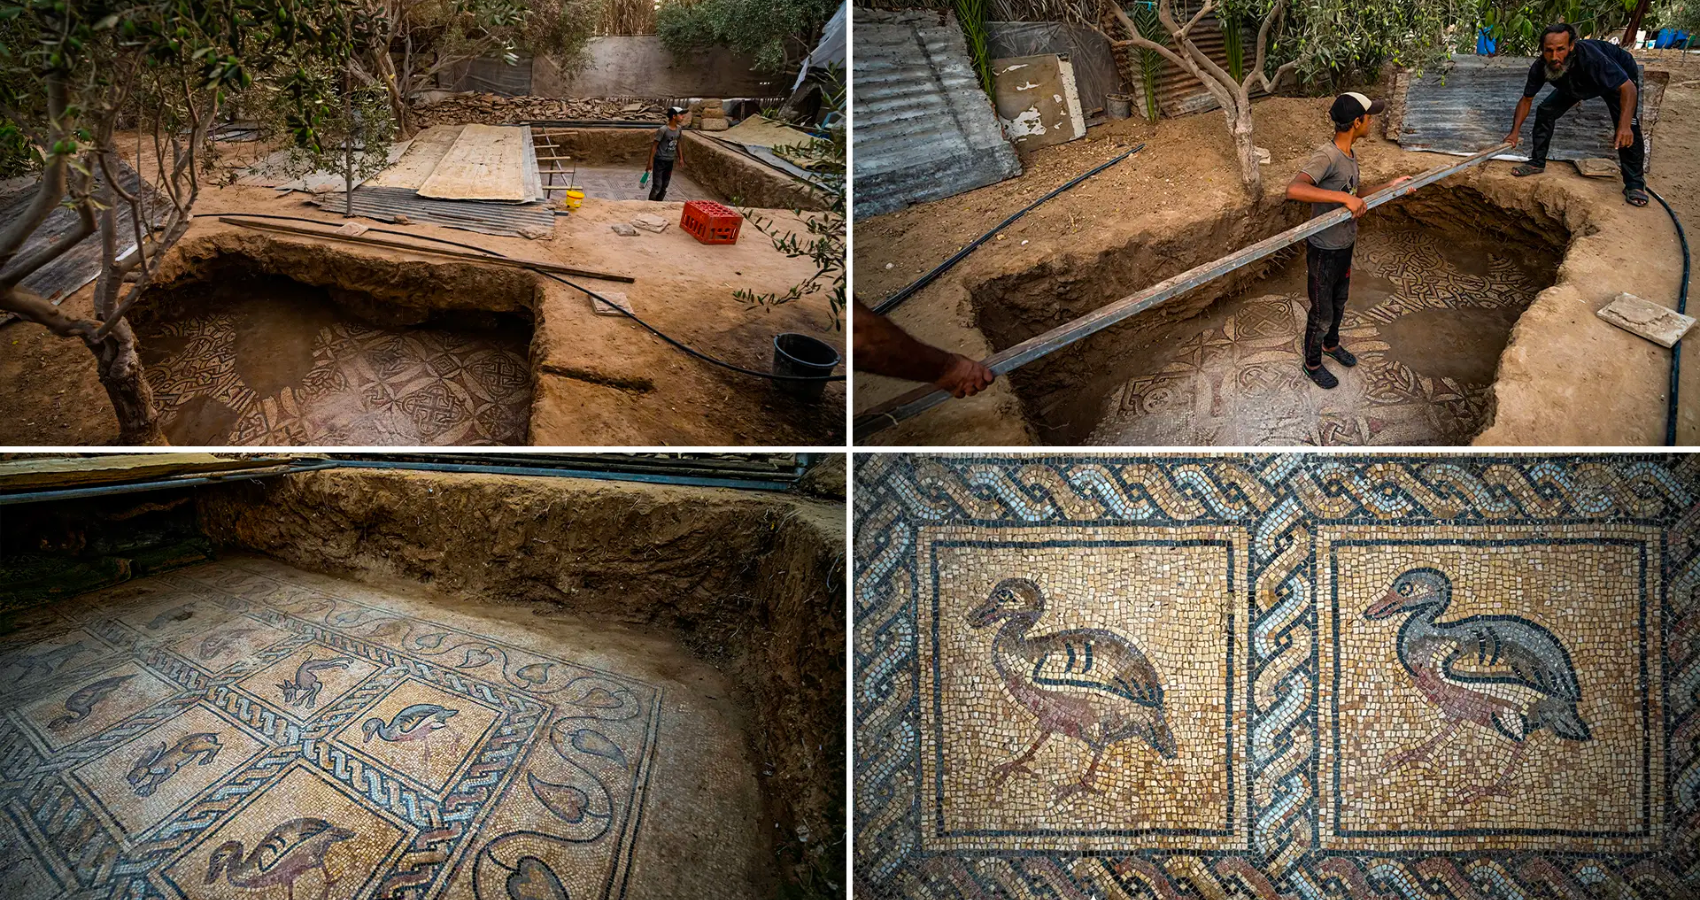 Palestinian farmer discovers rare Byzantine-era mosaic while planting olive tree in Gaza